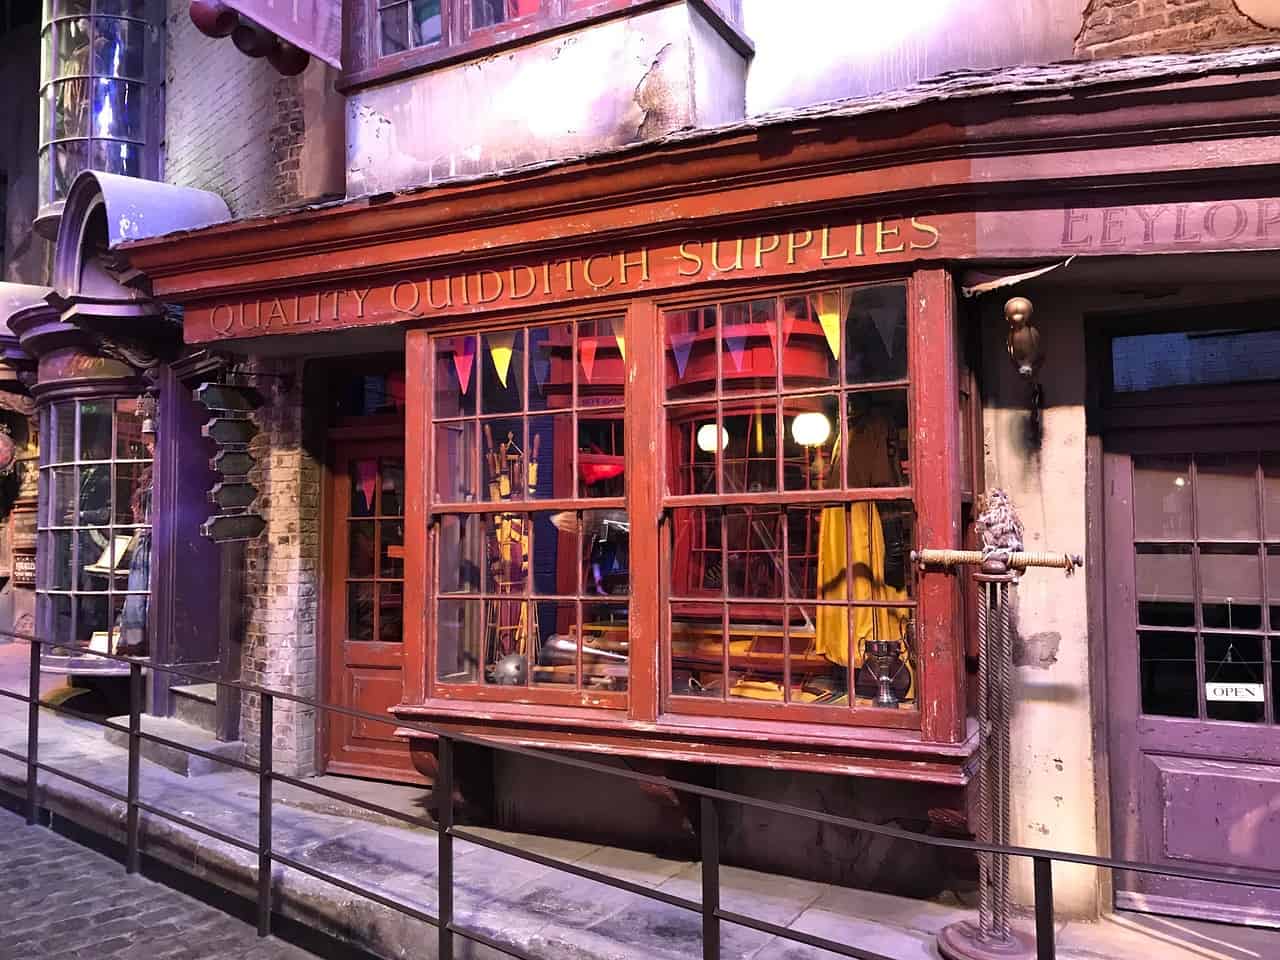 Kulissen in London wurden als Tour angeboten - The Making of Harry Potter